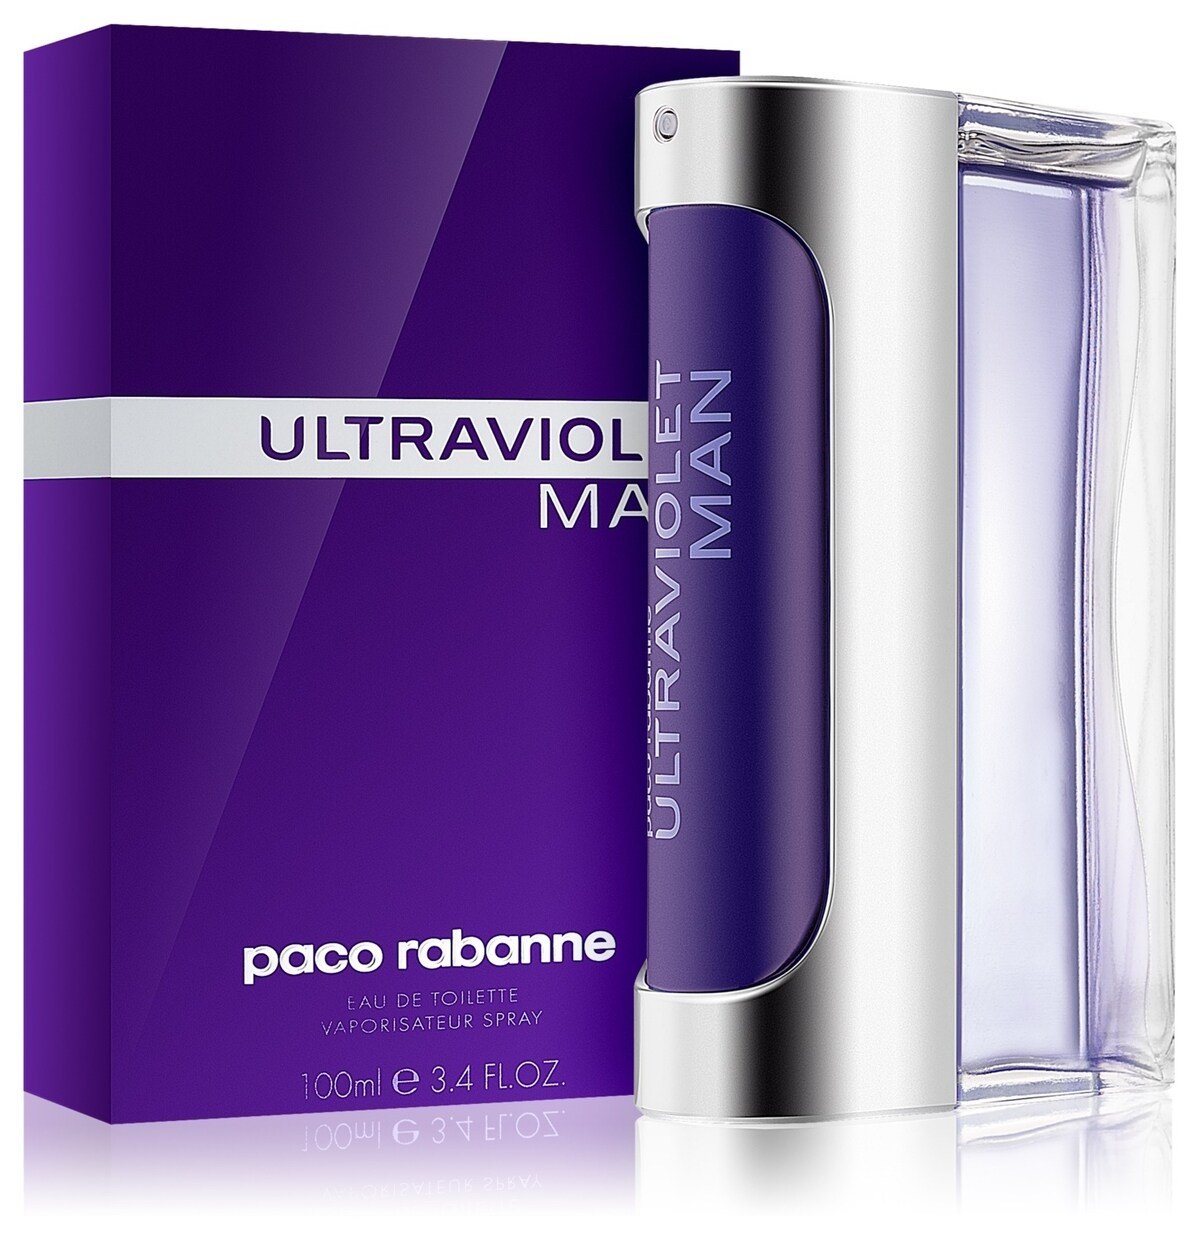 المكتب الحدود السلاسل الزمنية  Ultraviolet Man by Paco Rabanne (Eau de Toilette) » Reviews & Perfume Facts